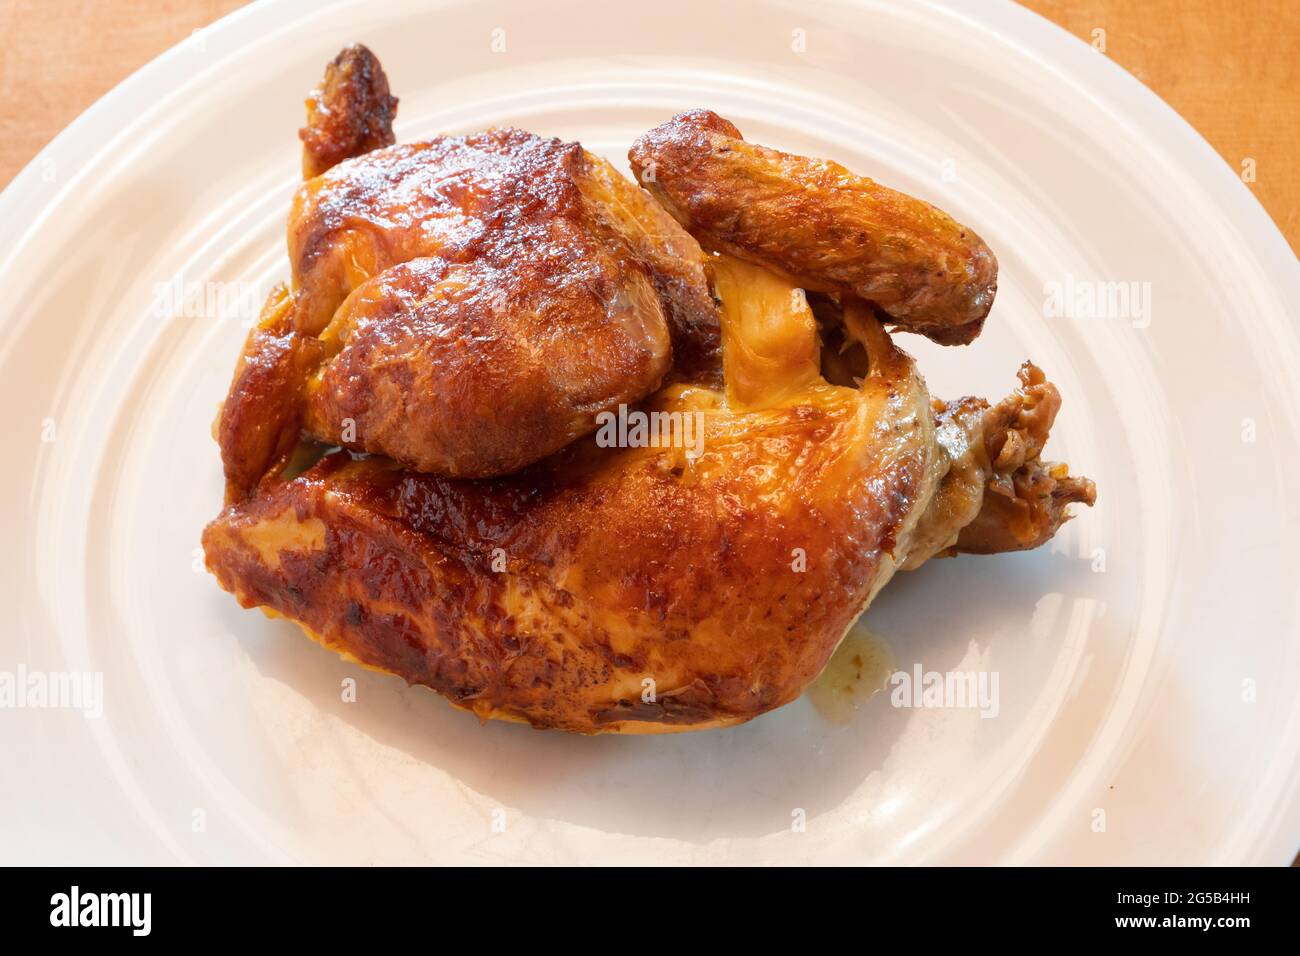 Roast Chicken Half on a White Plate, Rotisserie Chicken with Crispy Brown Skin Stock Photo